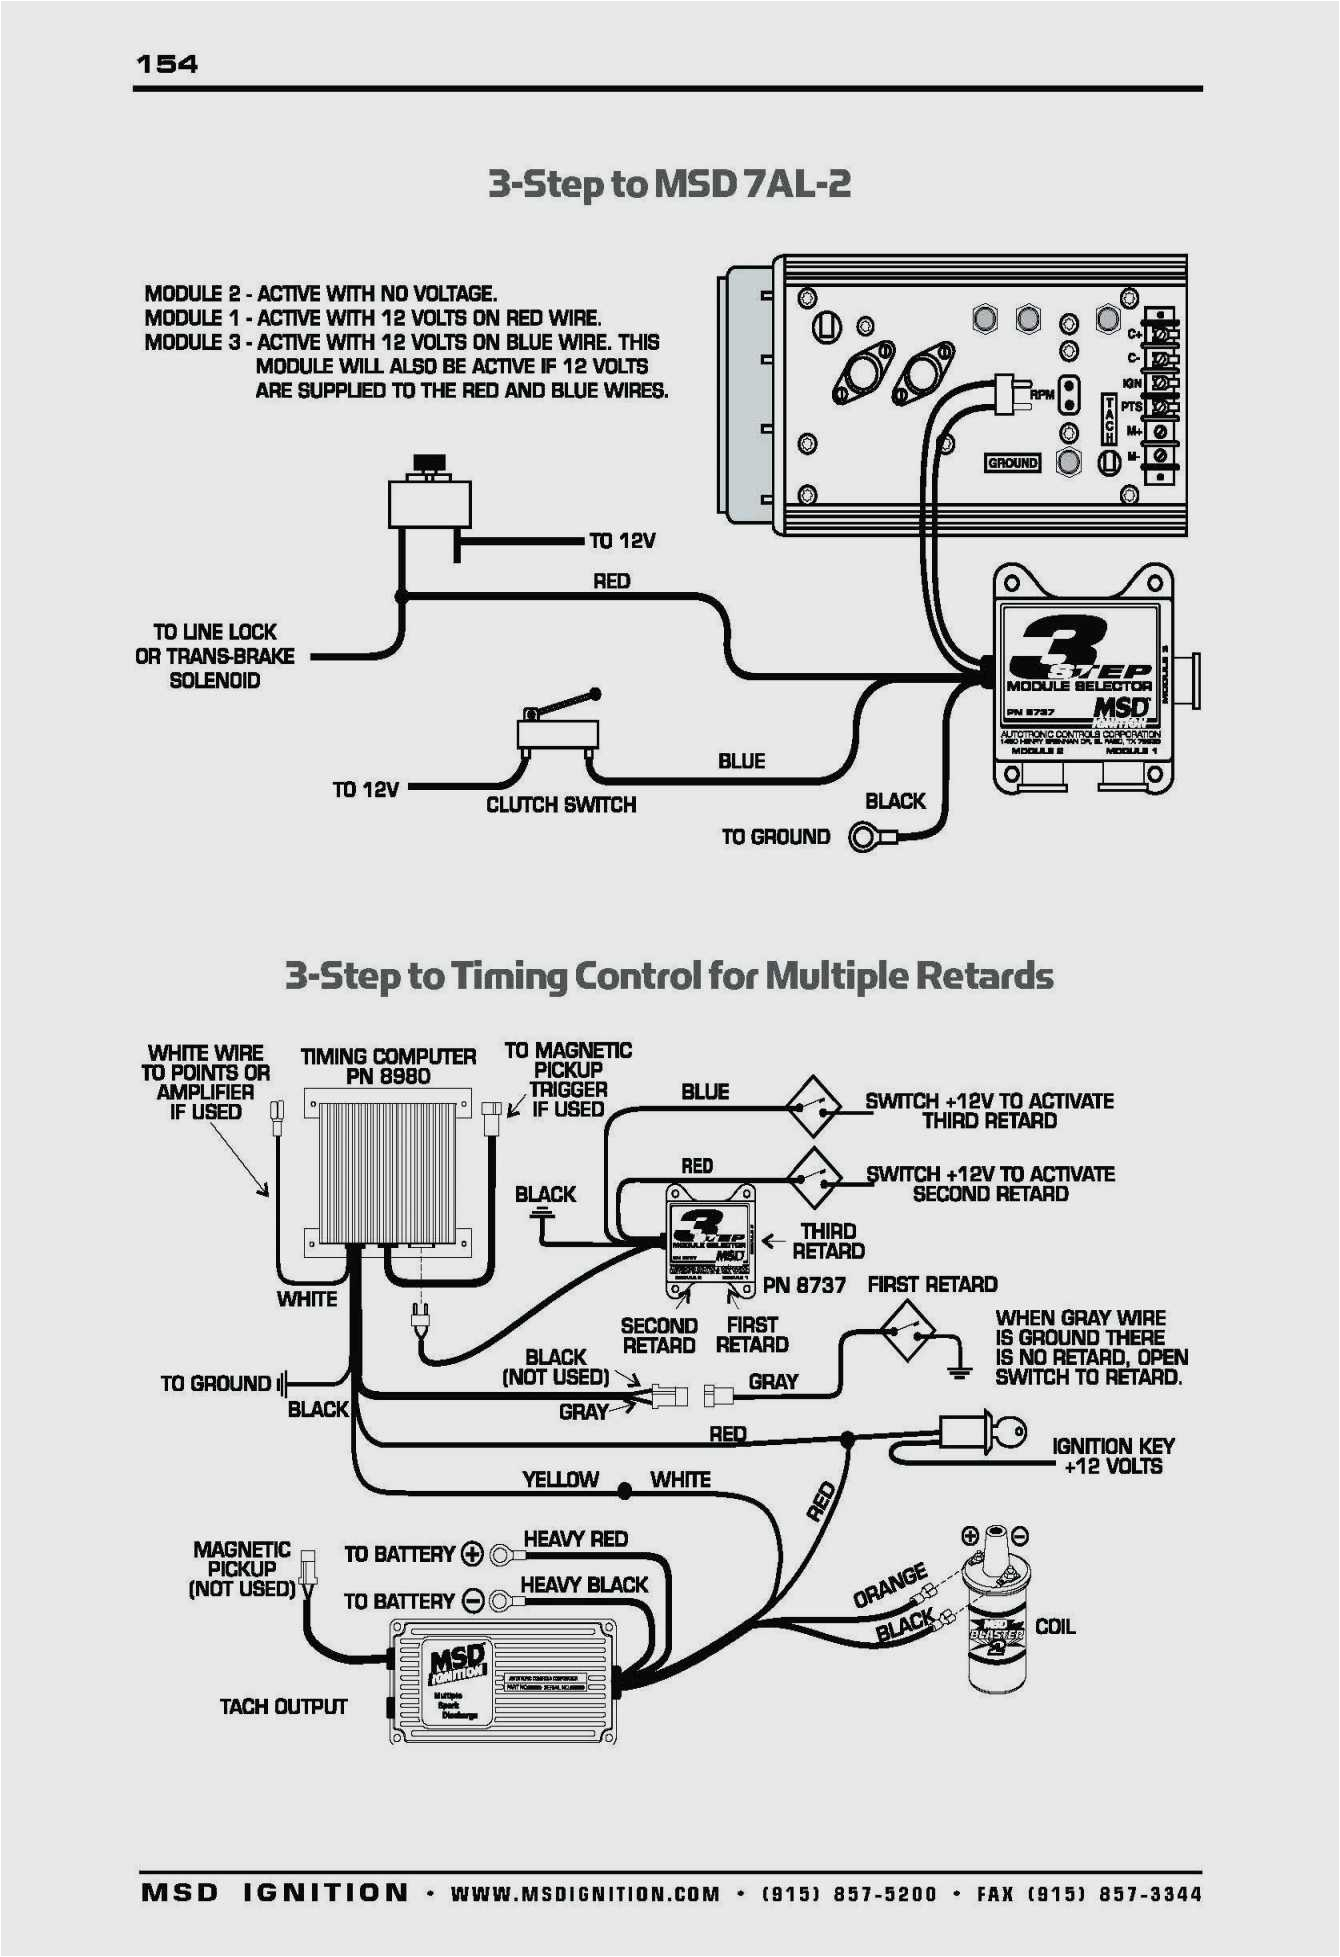 hemi msd al7 wiring diagram wiring diagram operationshemi msd al7 wiring diagram wiring diagram name hemi